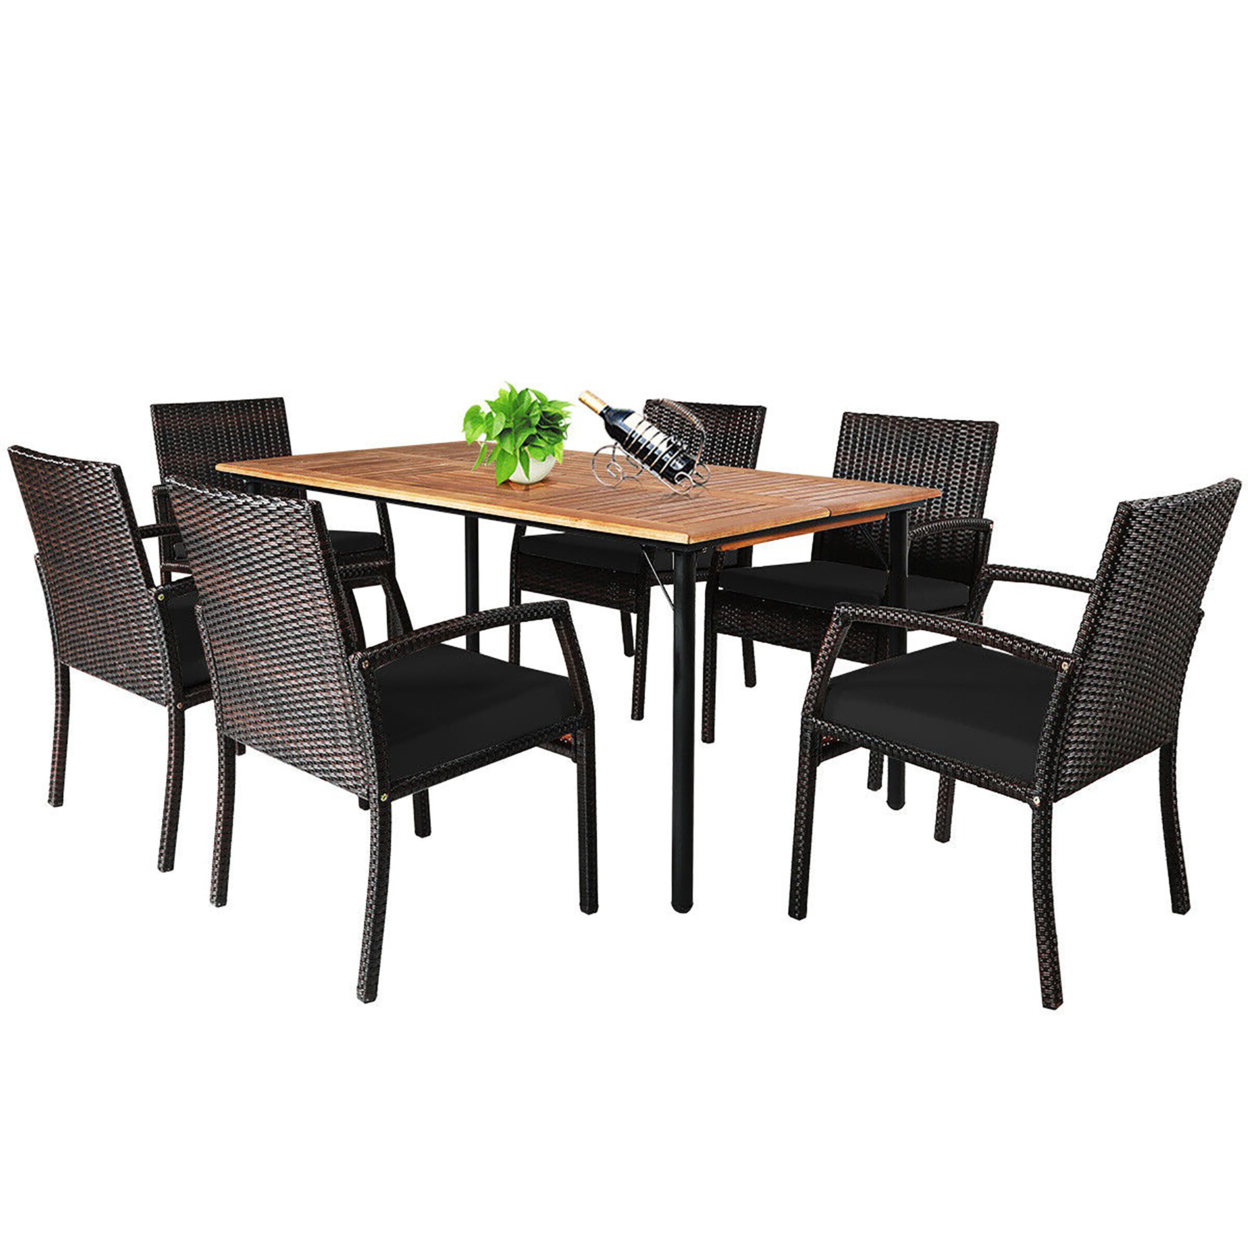 7PCS Patio Dining Furniture Set Yard W/ Wooden Tabletop Black Cushions